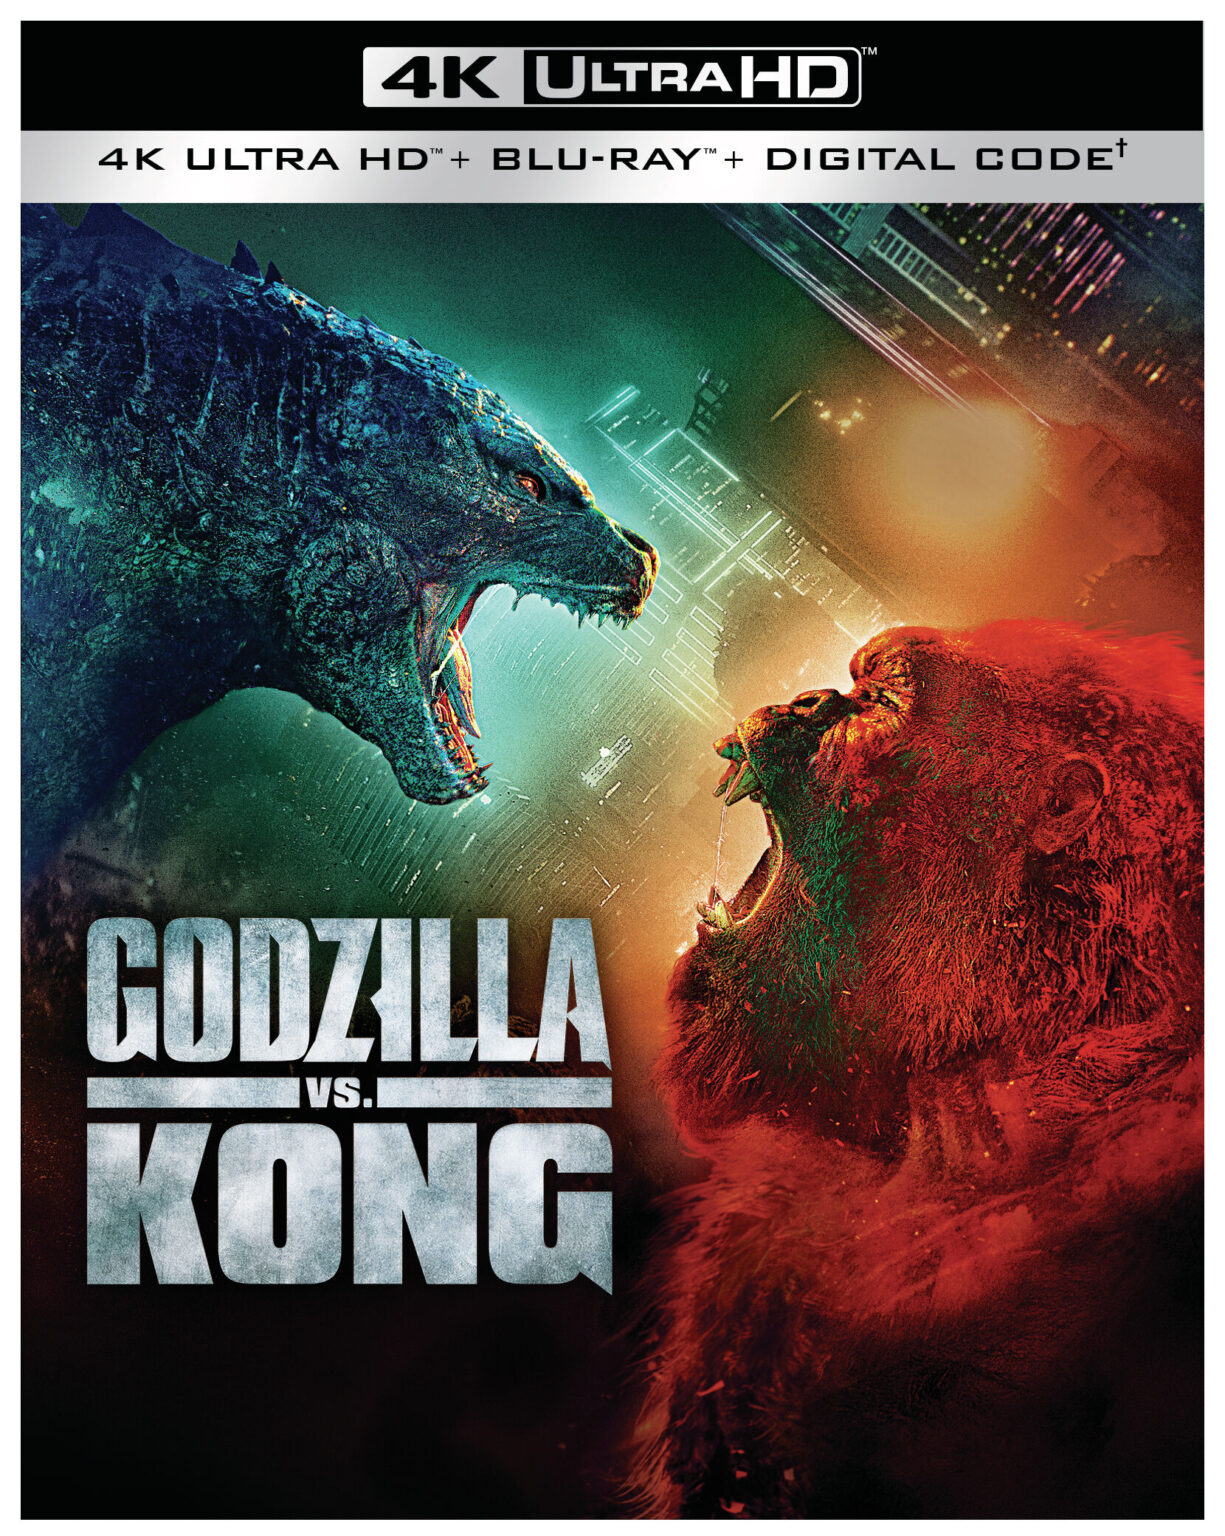 Own 'Godzilla vs. Kong' on 4K & Blu-ray June 15th - The Based Update